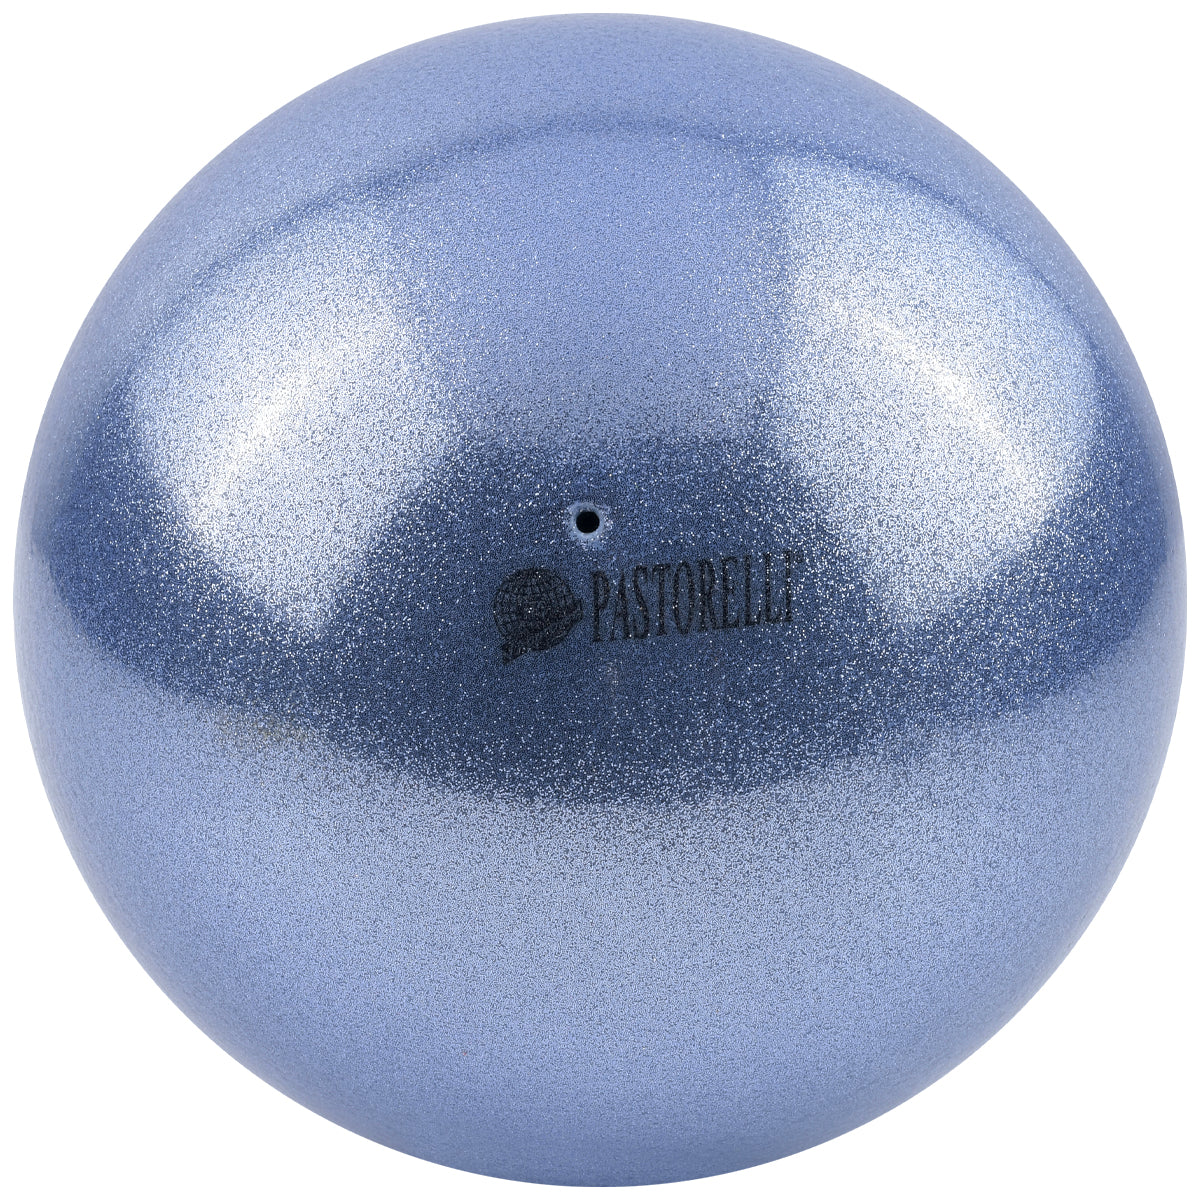 Pastel High Vision ball 18 cm